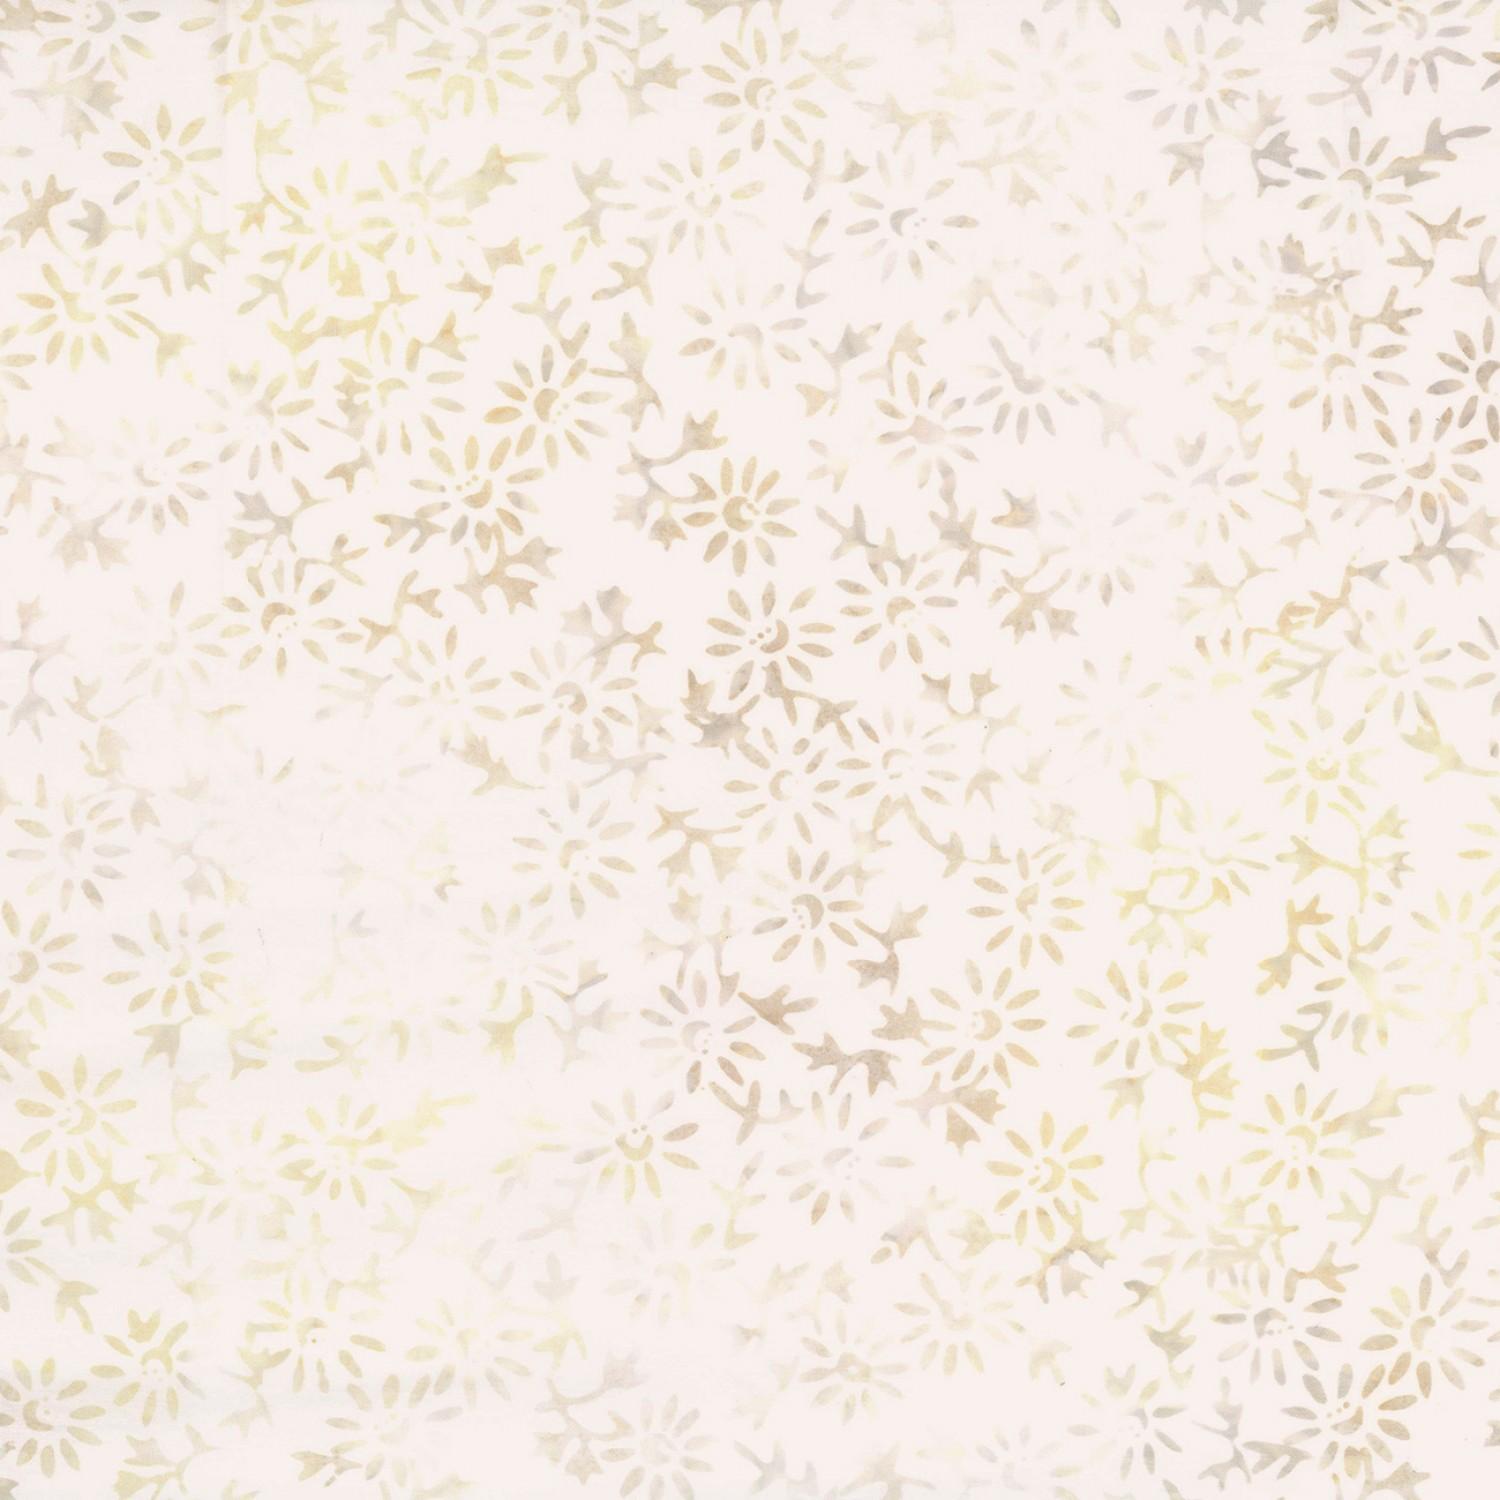 Moonlight - Ivory Small Floral Batik # 22267-112